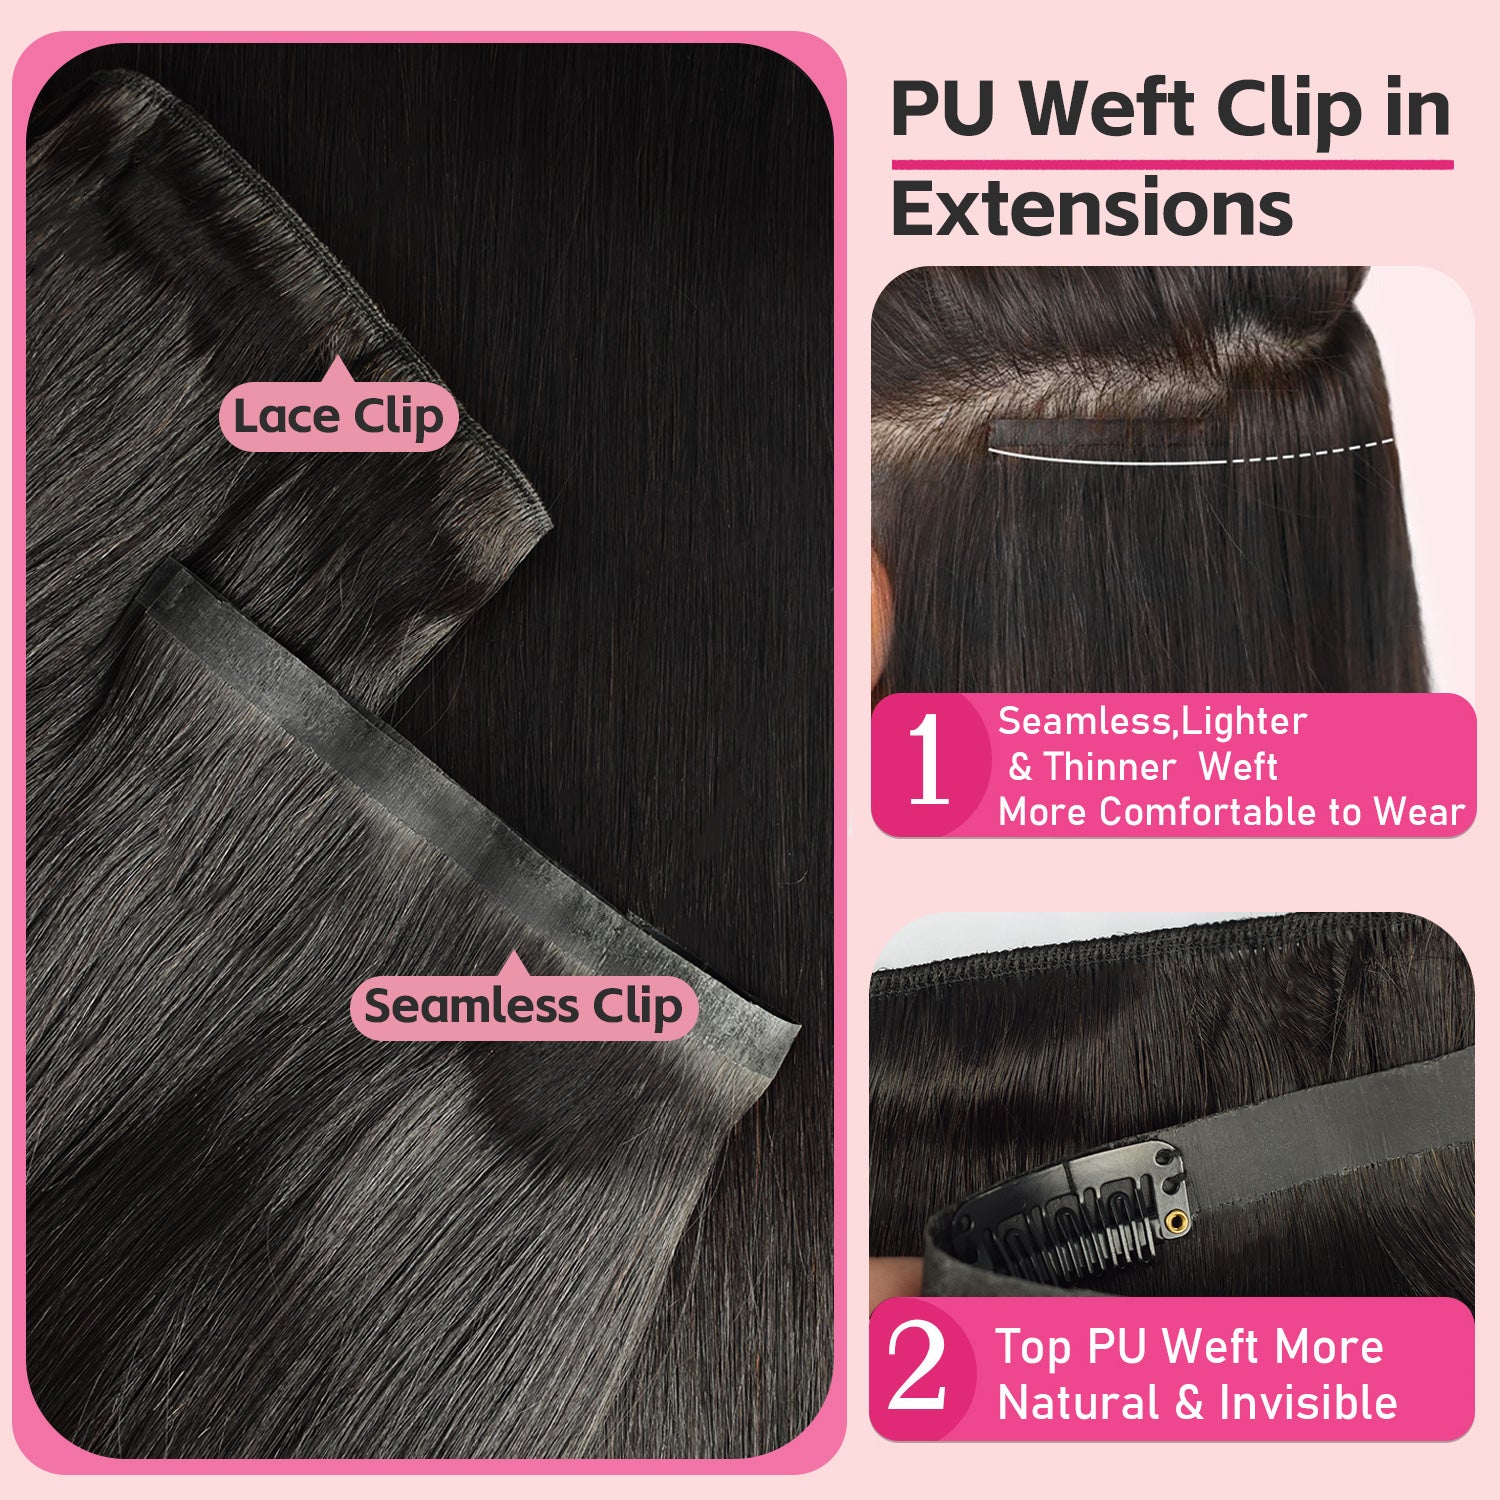 CVOHAIR 6Pcs Body Wave Clip in Hair Extensions Real Human Hair PU Seamless Clip ins Natural Black 110G